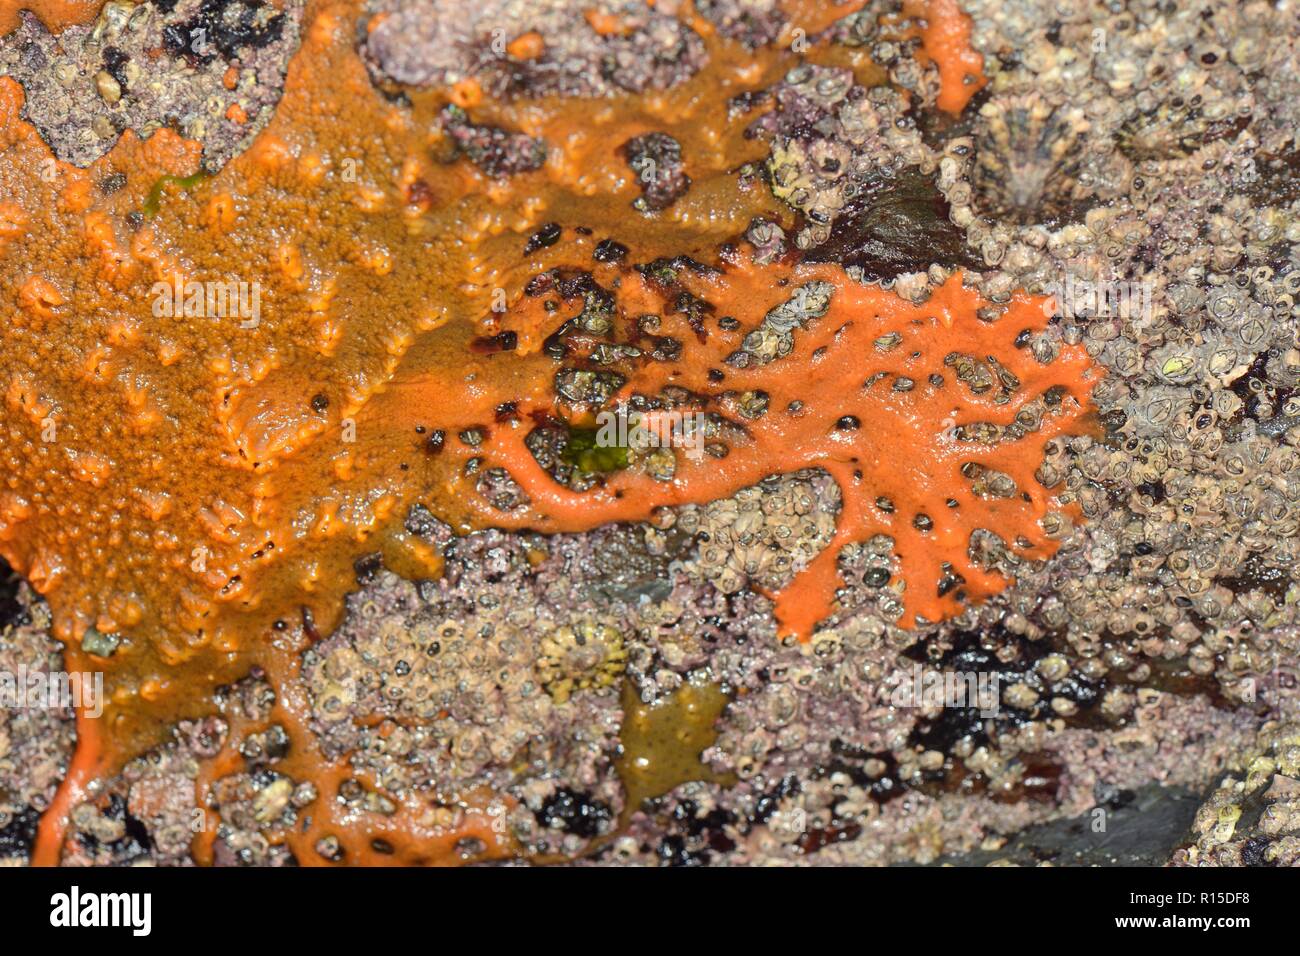 Crumb-of-bread sponge  (Hymeniacidon perlevis) in its orange encrusting form on exposed intertidal rocks, with recent amoeba-like growth pattern. Stock Photo